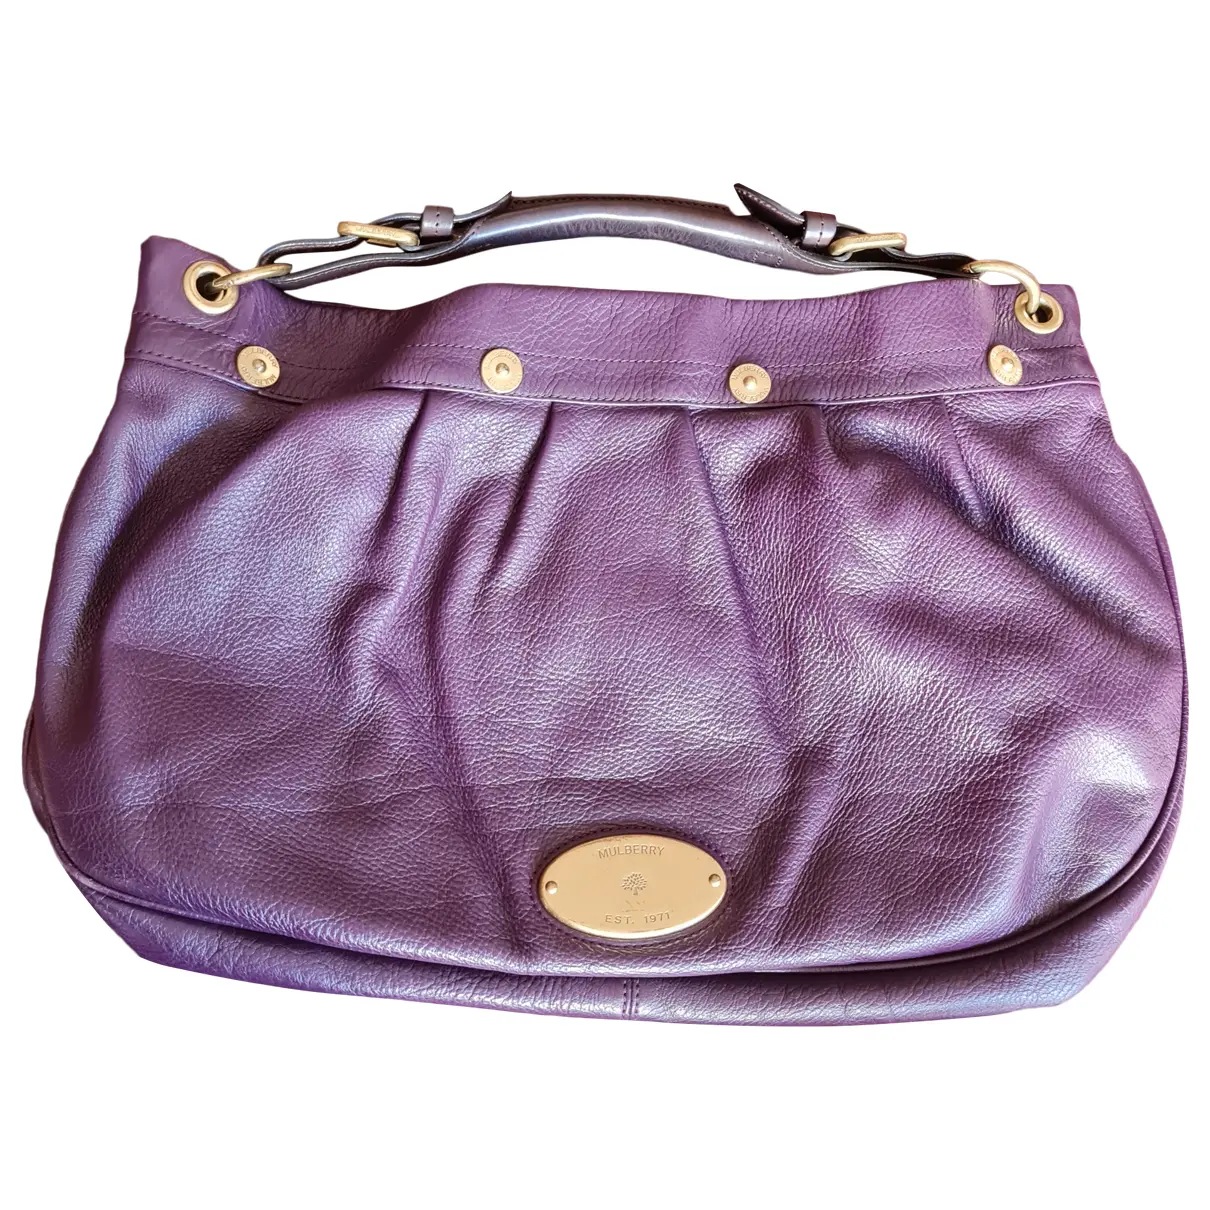 Bella Hobo leather handbag